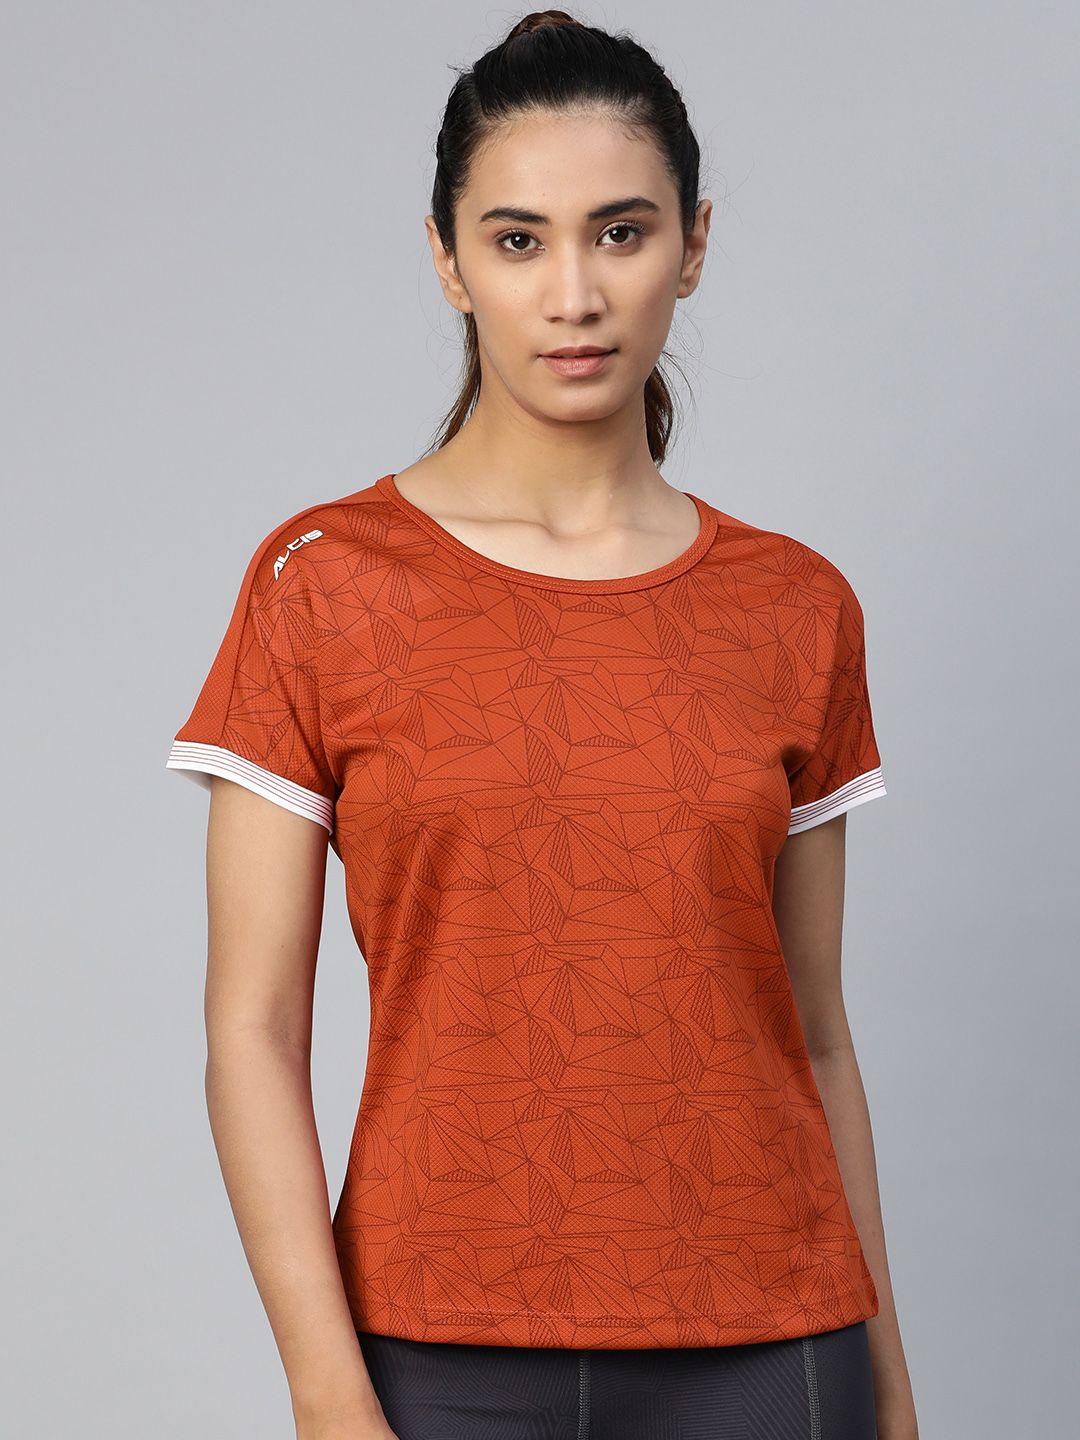 alcis women rust orange & maroon printed round neck tennis t-shirt